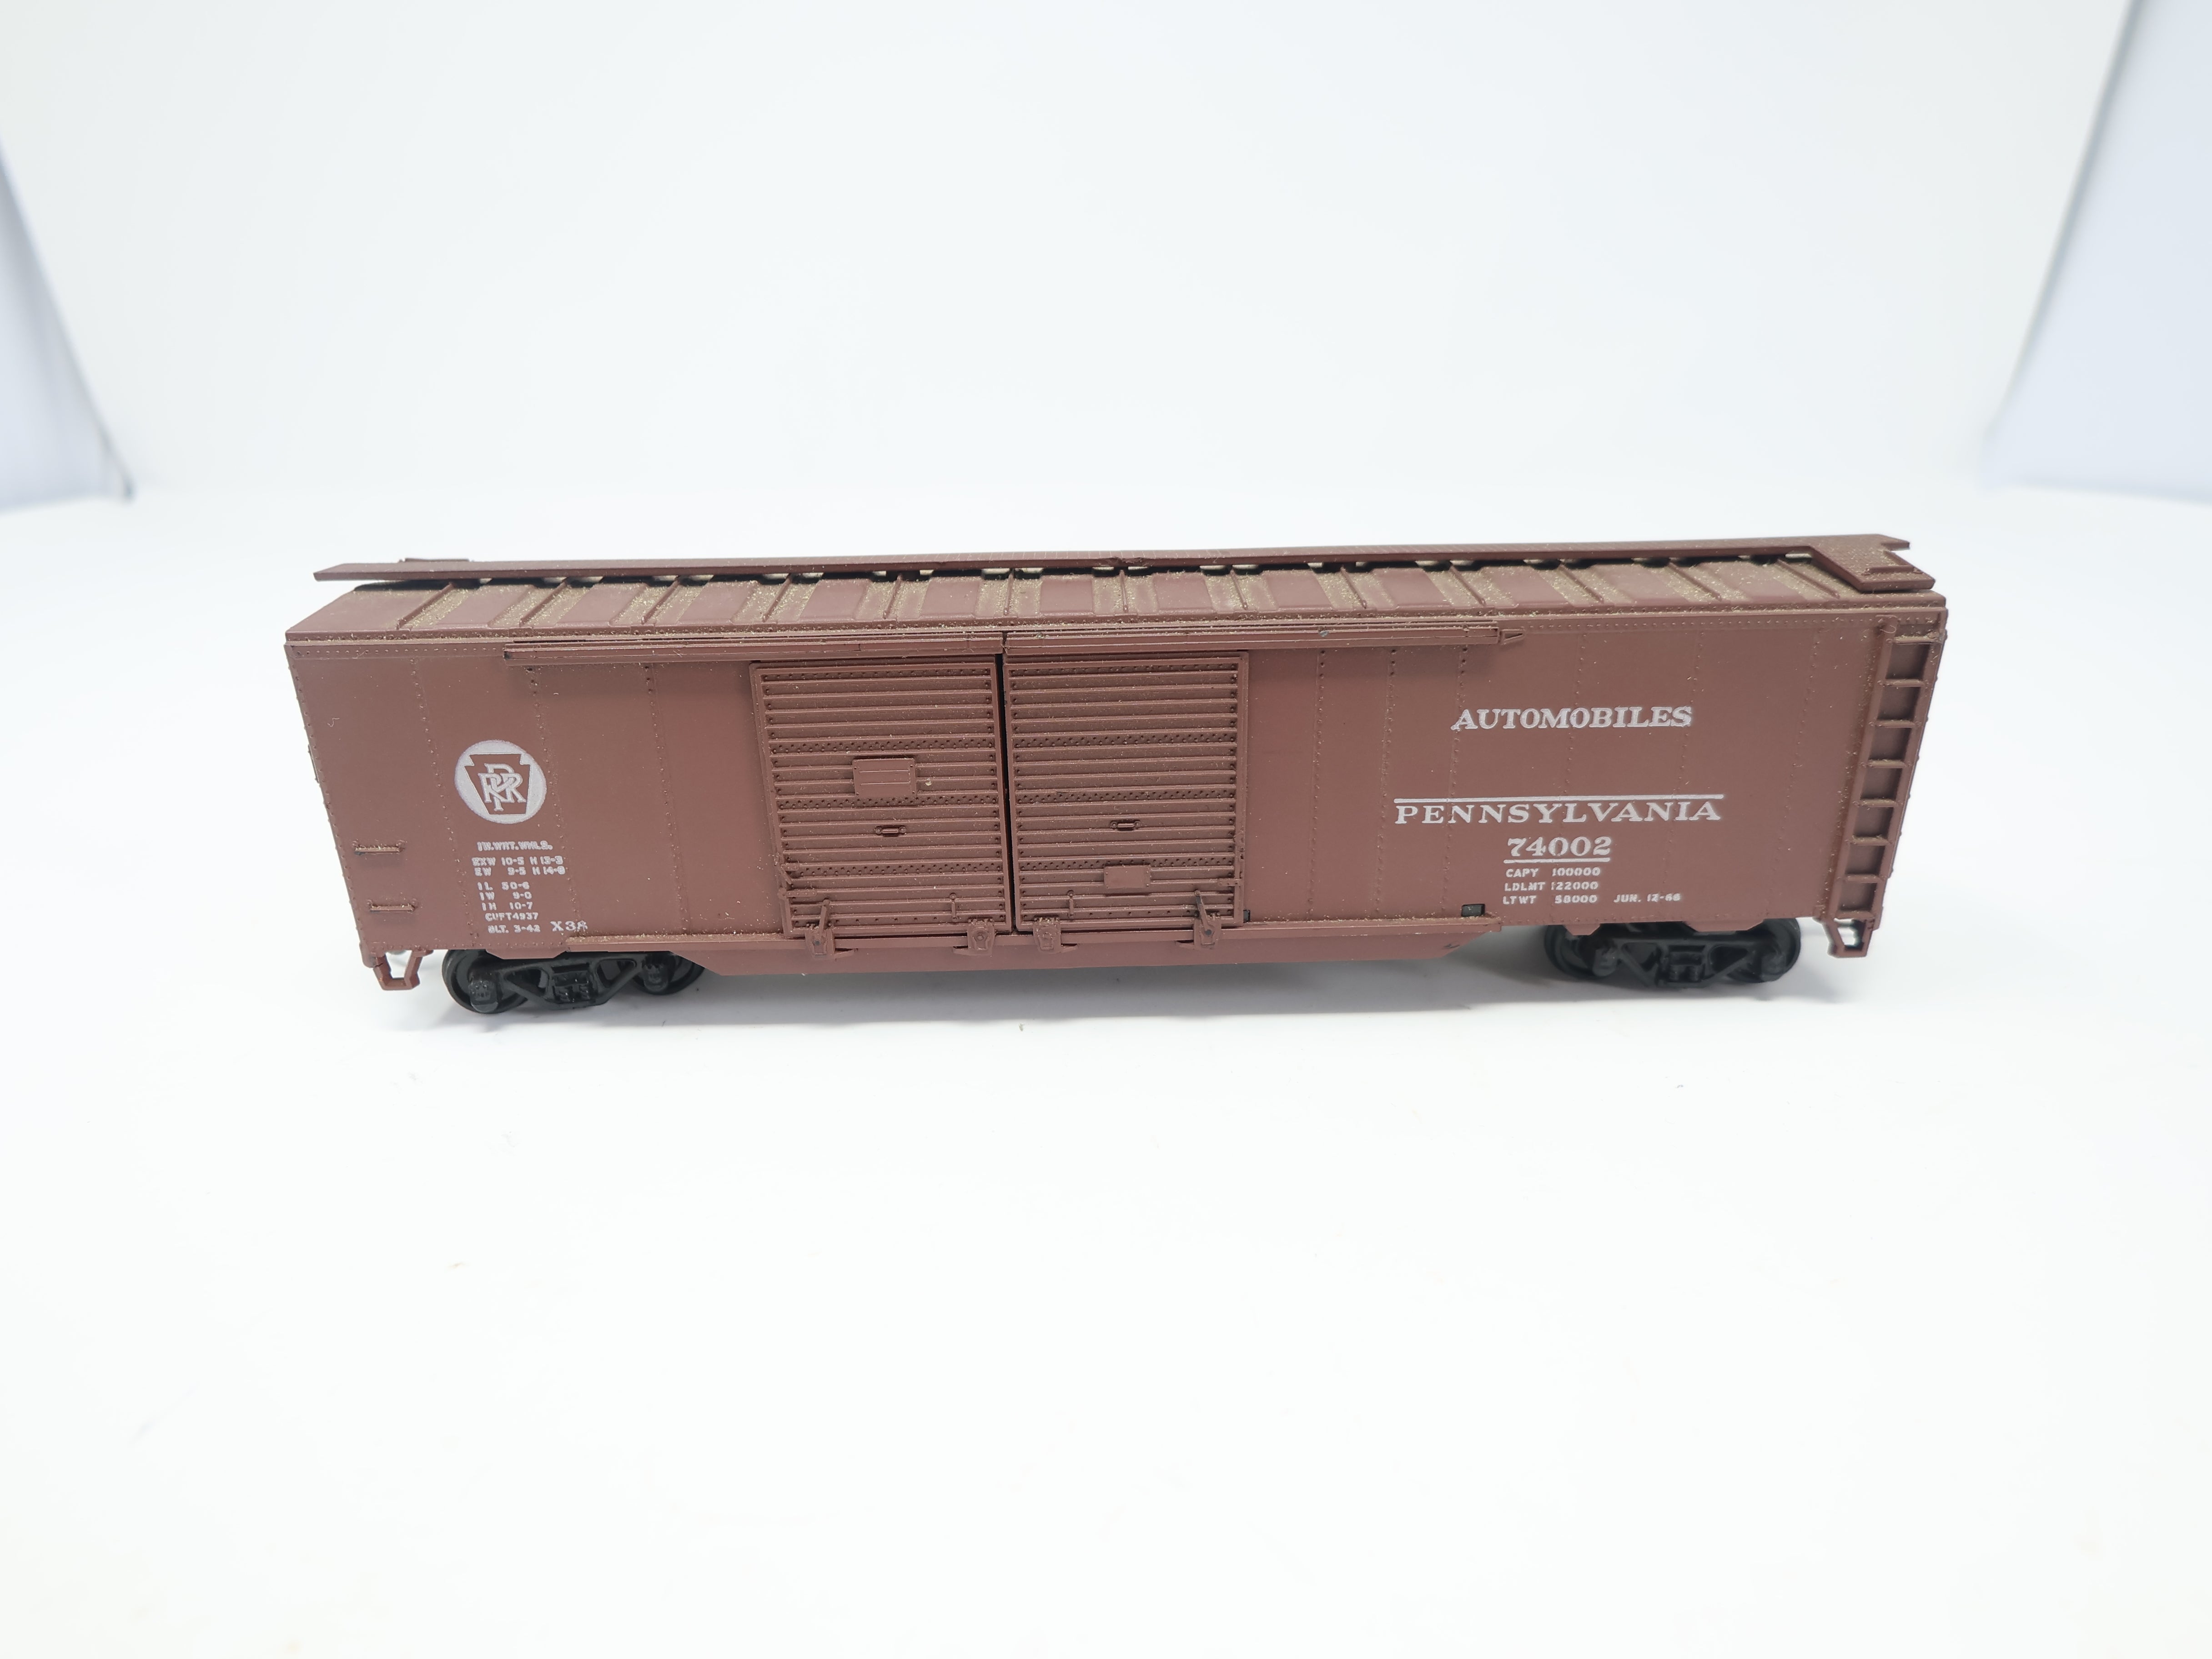 USED Athearn HO Scale, 50' Steel Box Car, Pennsylvania #74002, Automobiles